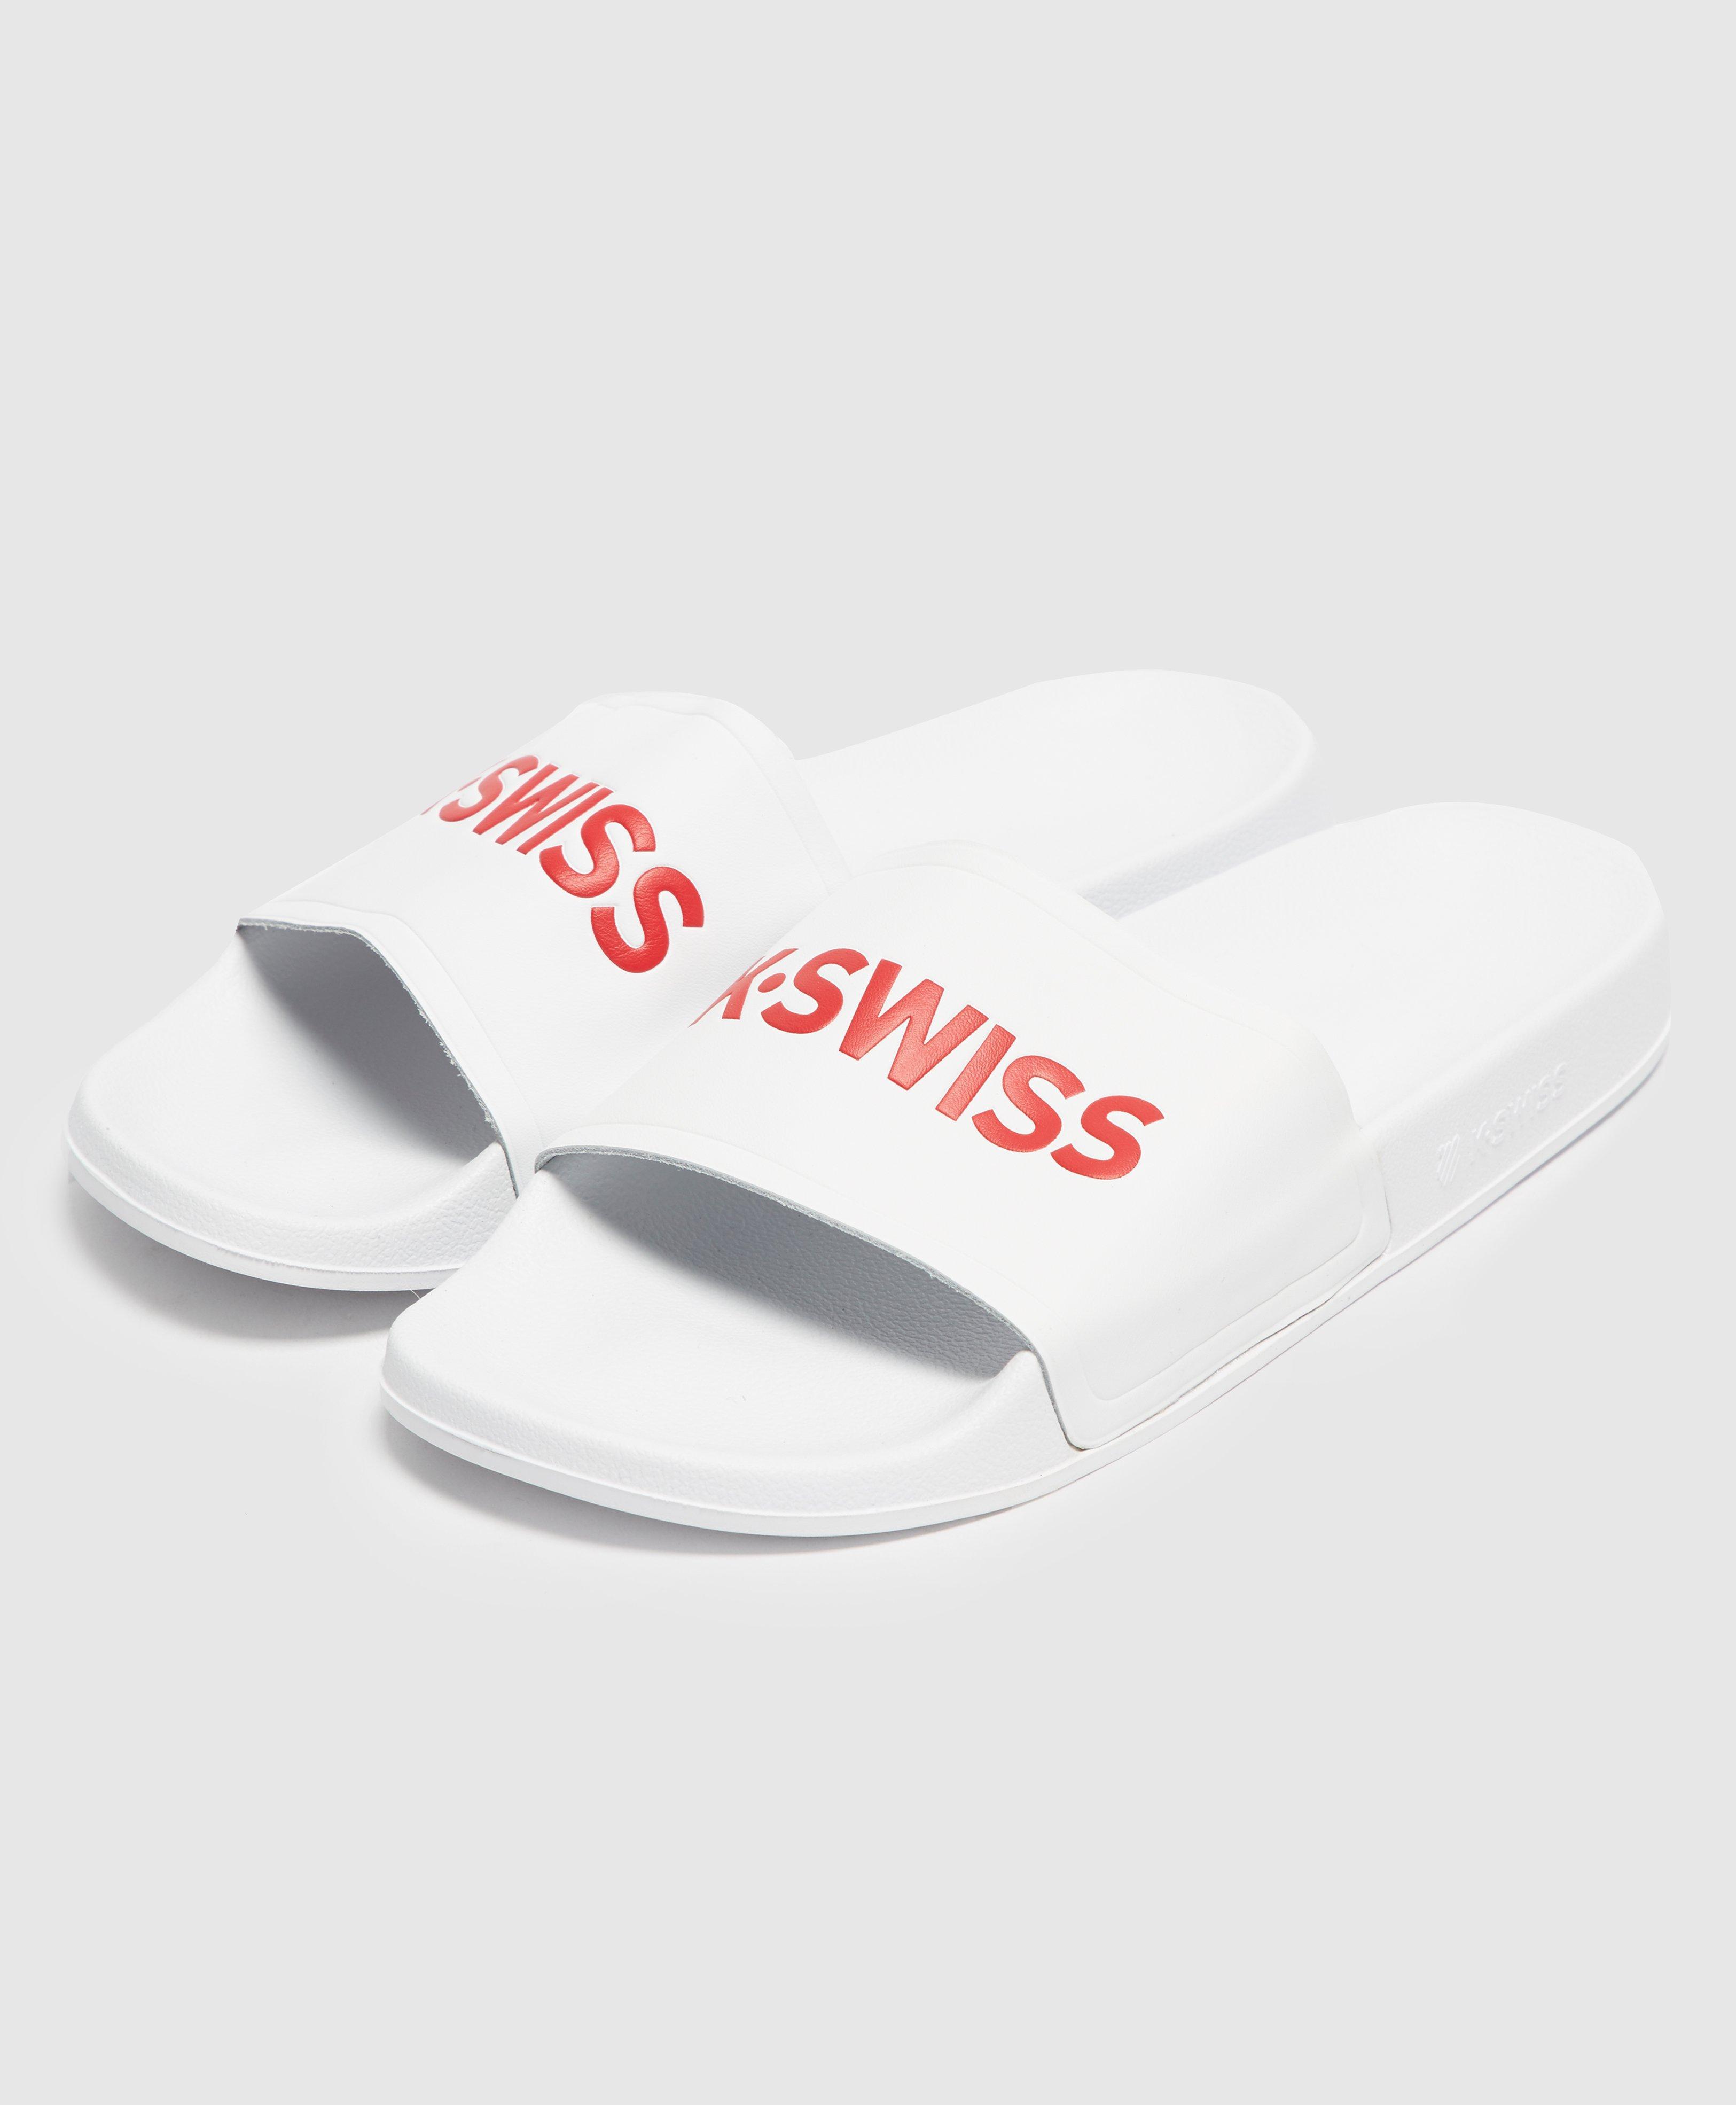 K Swiss Bramble Sliders Mens Gents Pool Shoes Slip On Strap Stamp All Over 